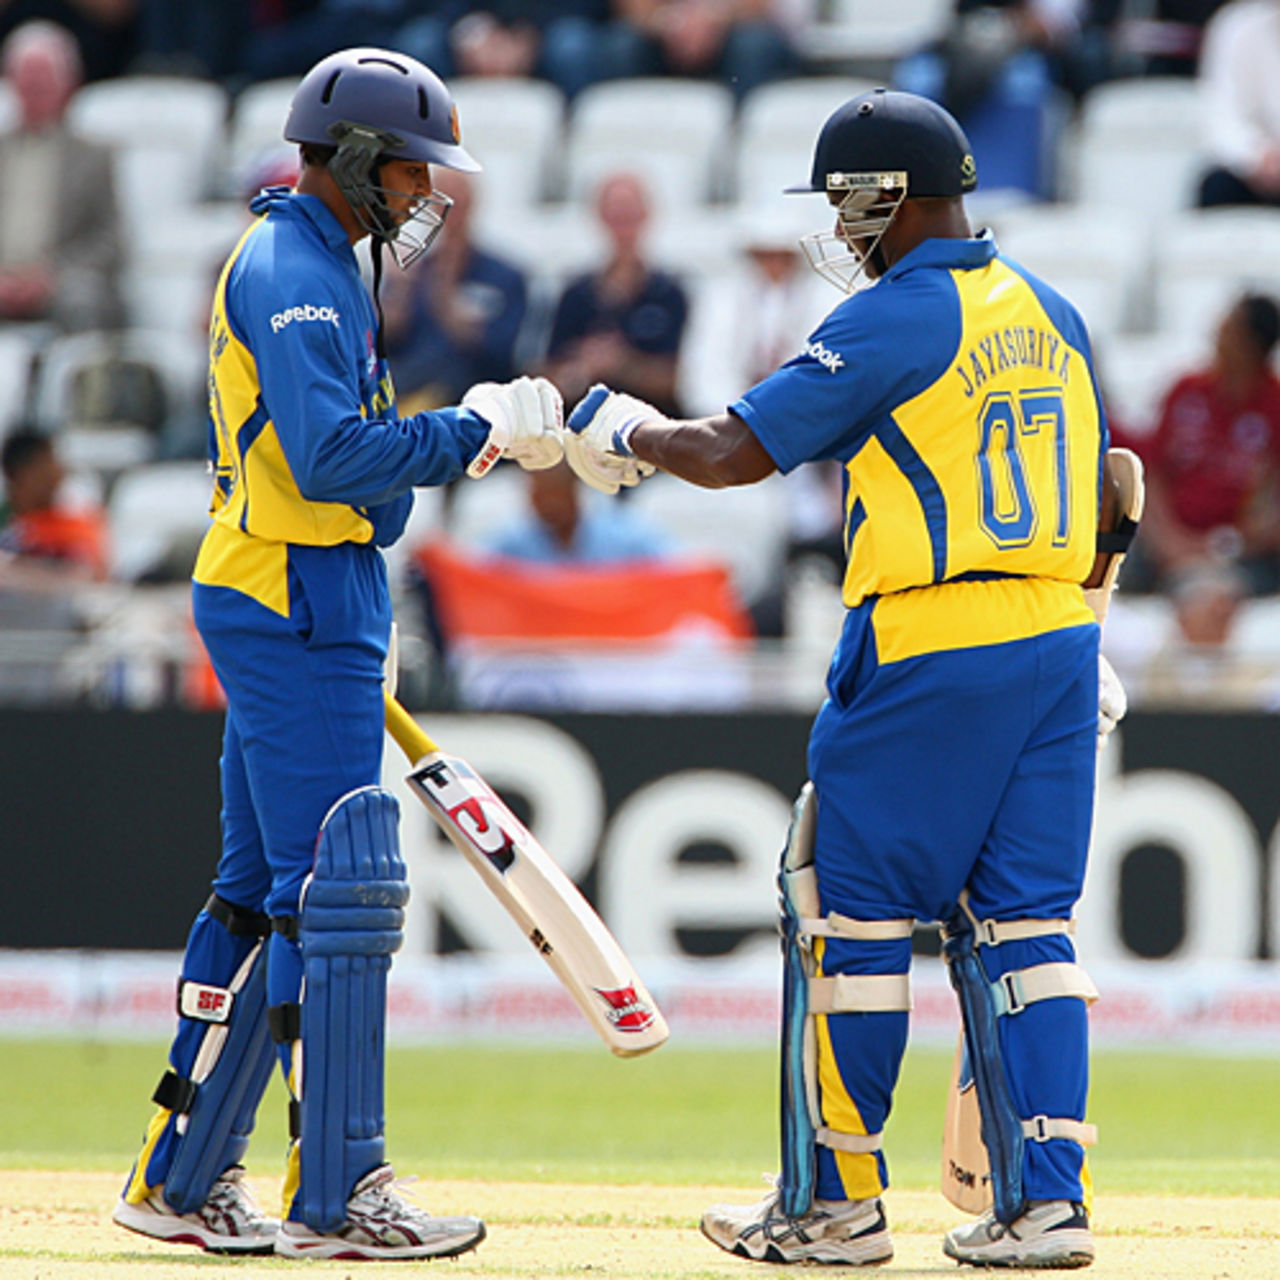 Tillakaratne Dilshan and Sanath Jayasuriya reach their century partnership, Sri Lanka v West Indies, ICC World Twenty20, Trent Bridge, June 10, 2009